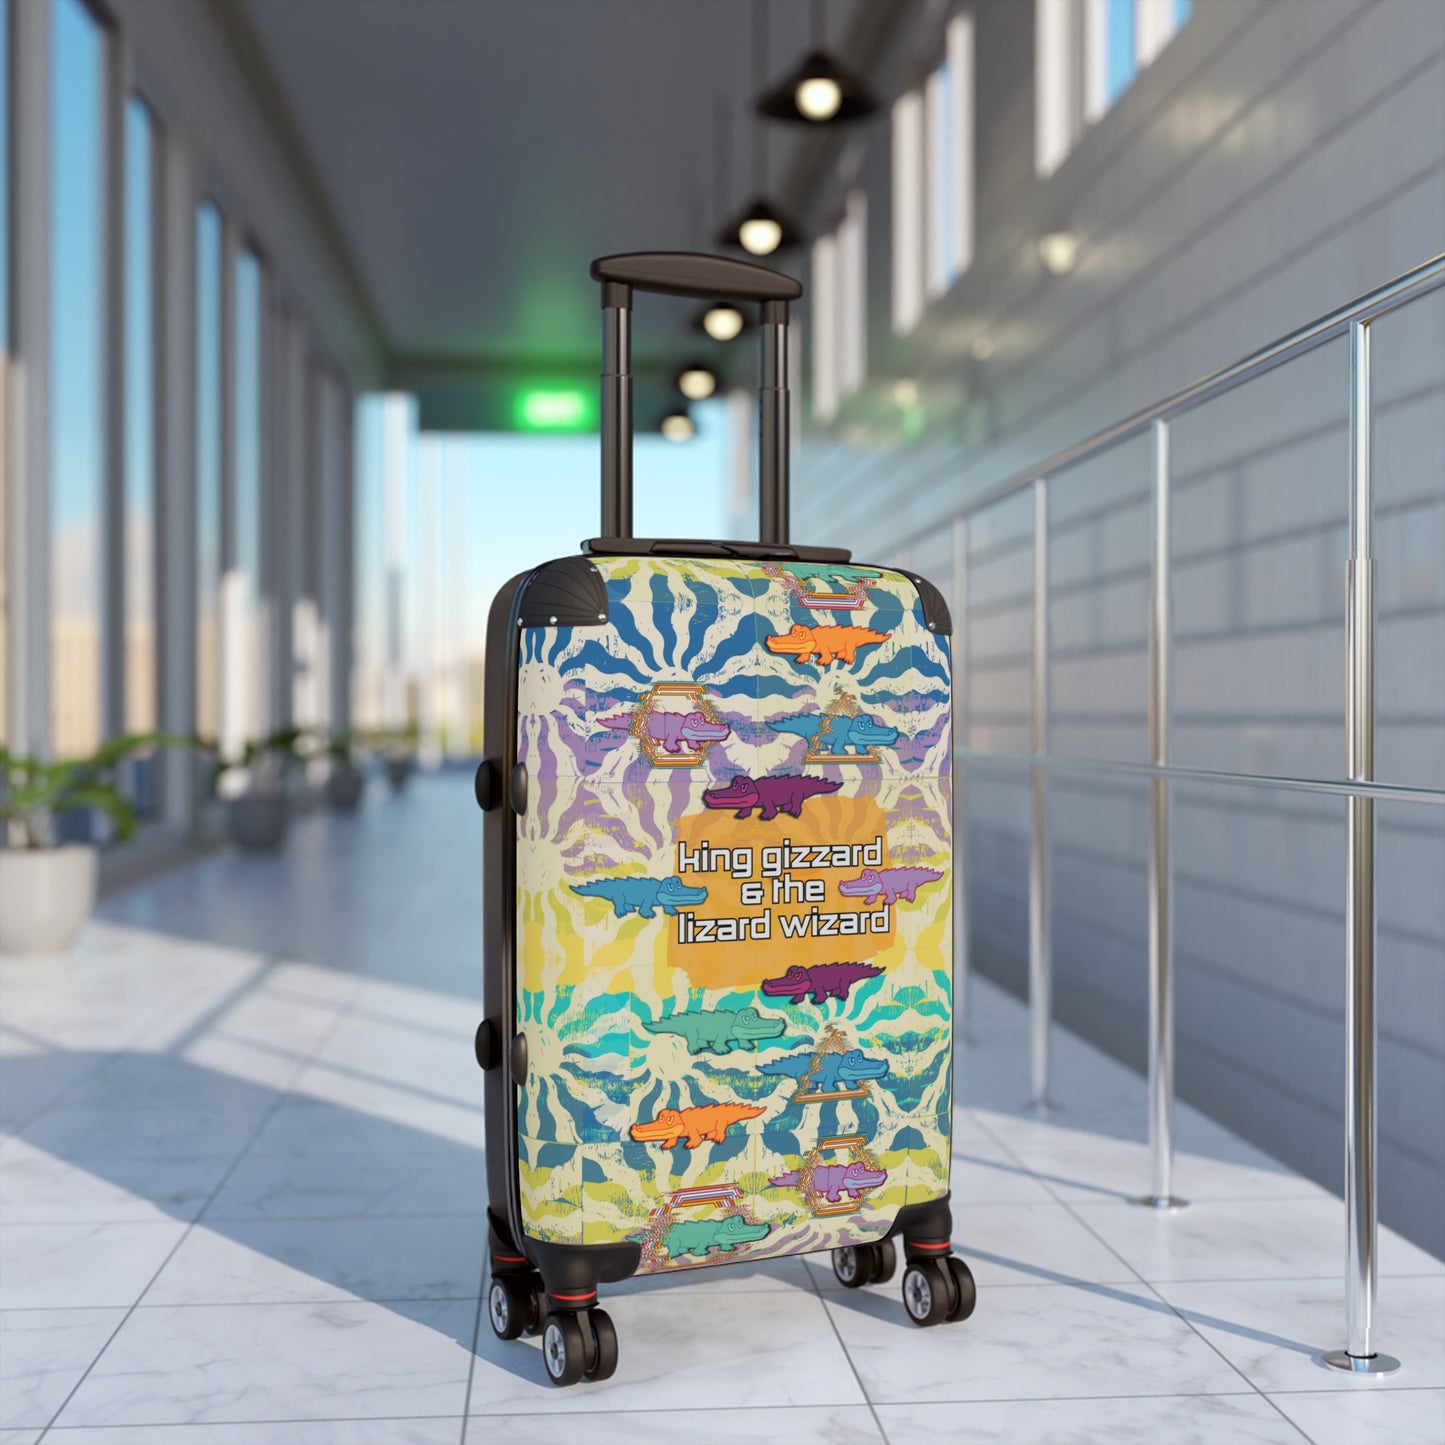 Alligator King Gizzard suitcase custom trippy design in airport